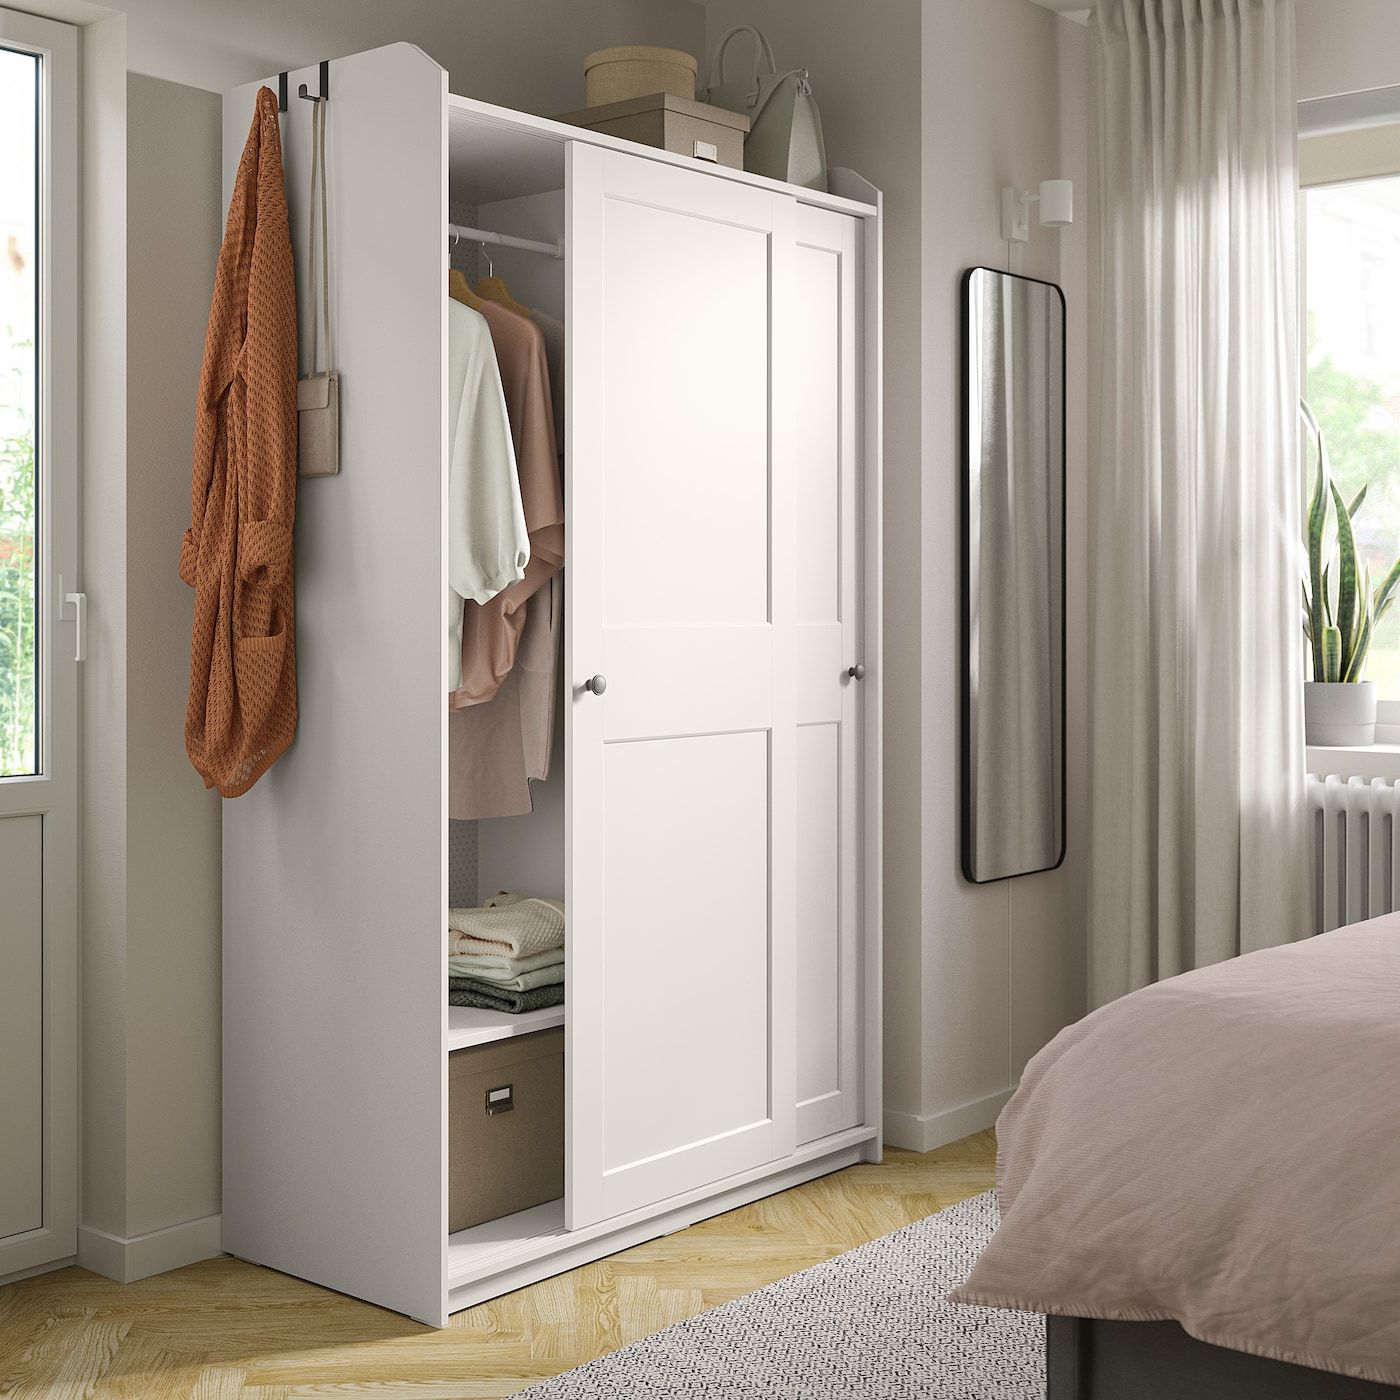 Hauga Wardrobe With Sliding Doors, White, 118x55x199 Cm – Ikea With Regard To 4 Door White Wardrobes (Gallery 11 of 20)